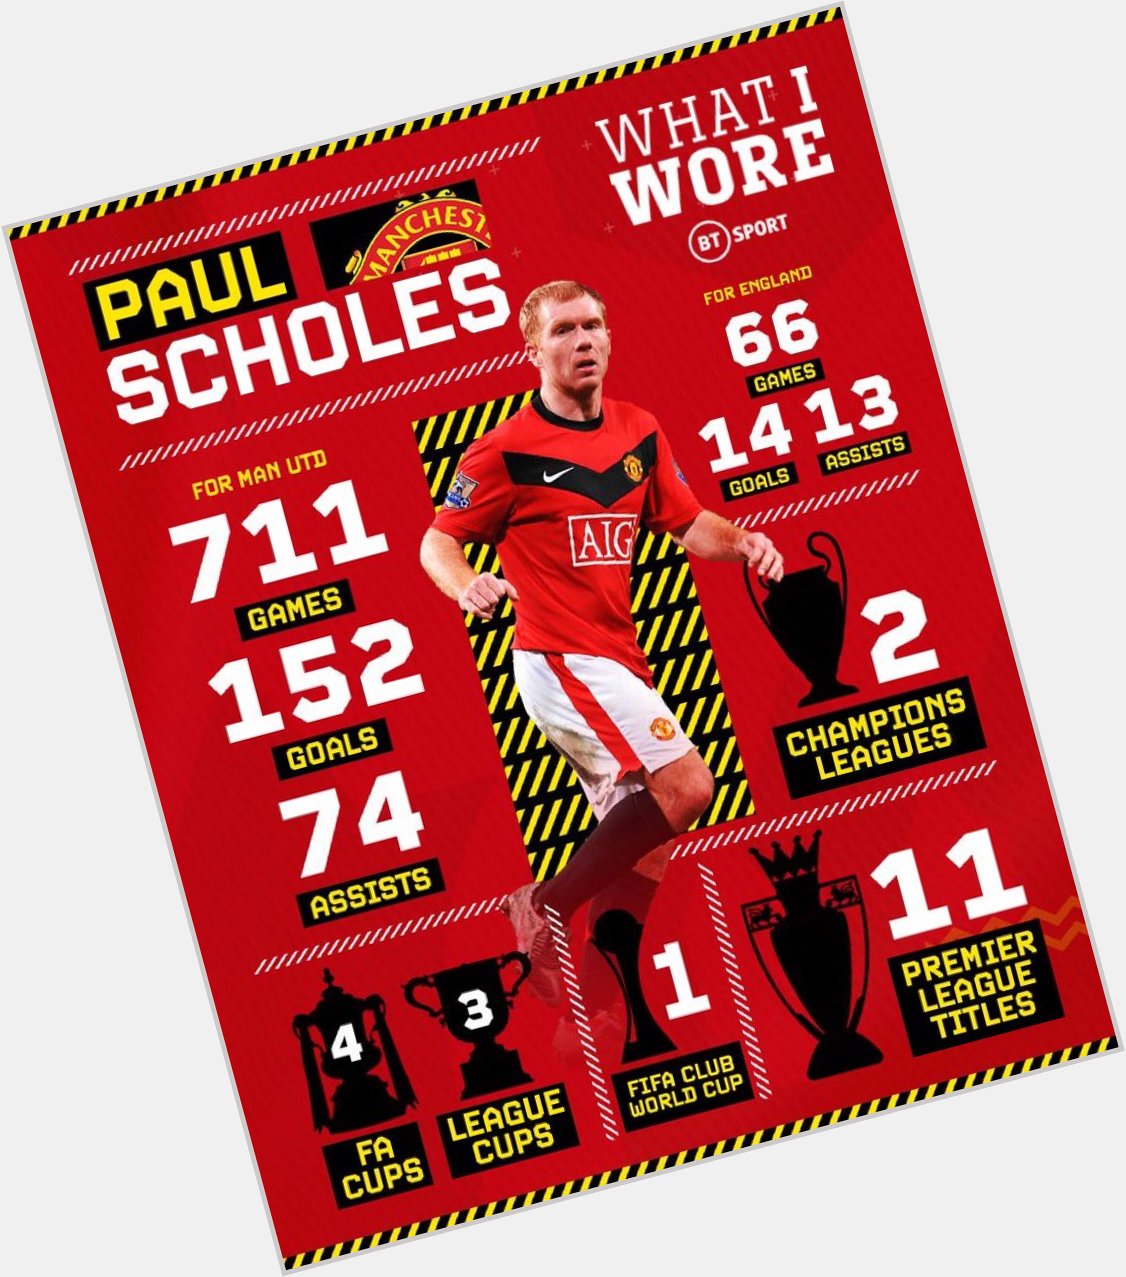 Happy birthday to the greatest midfielder ever. Paul Scholes! 